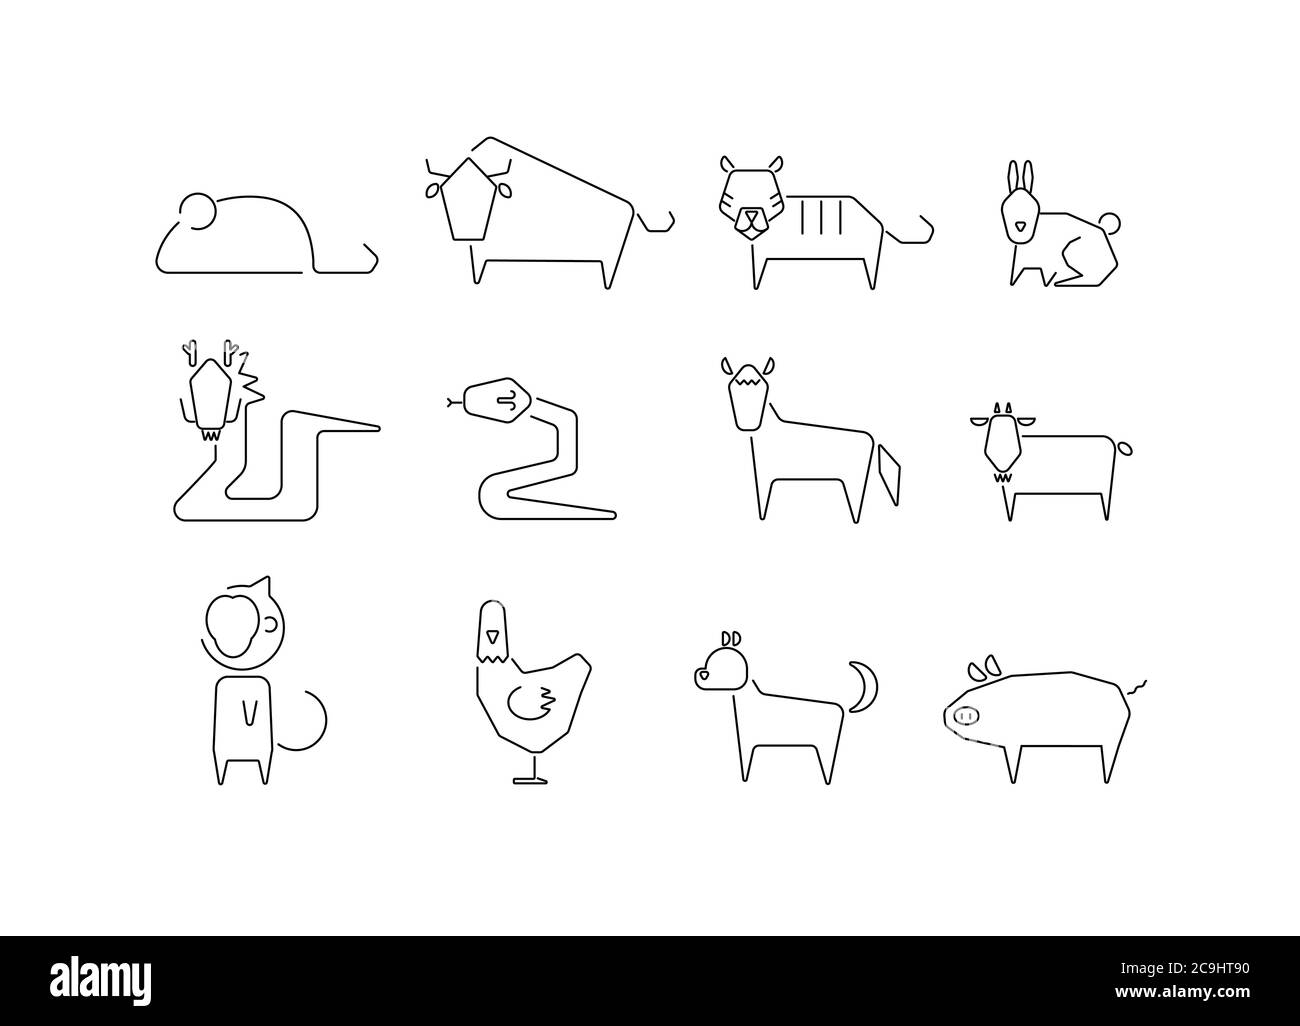 Zodiac animal icons set on white background. Stock Vector